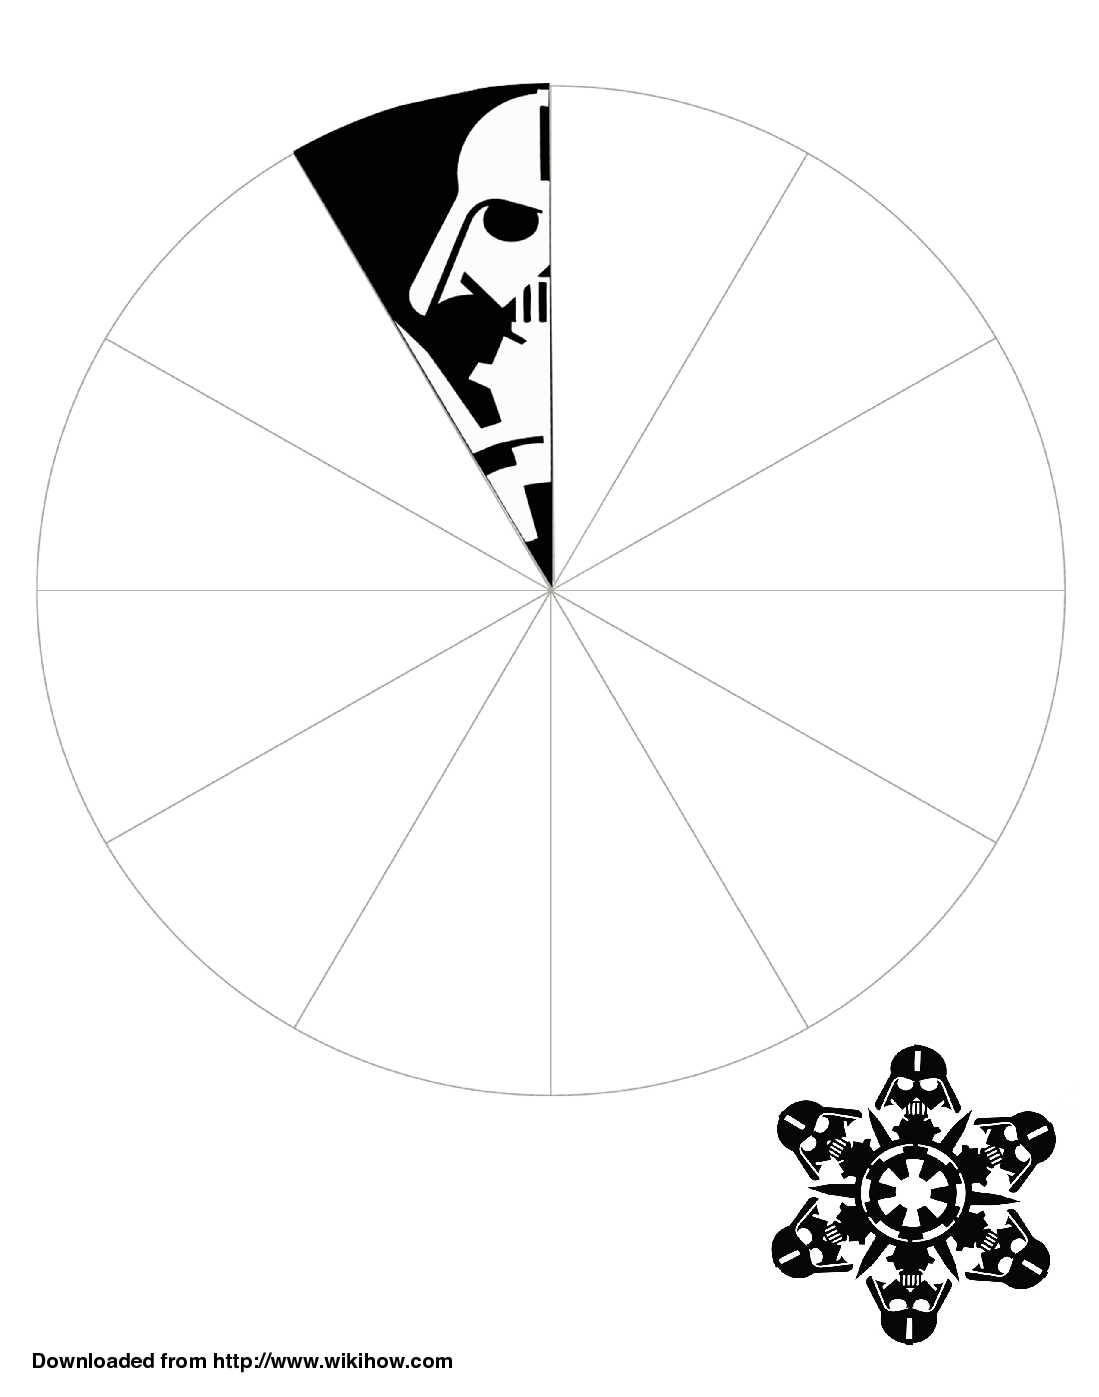 Printable Darth Vader Snowflake Template Wikihow Star Wars Snowflakes Star Wars Snowflakes Patterns Star Wars Snowflakes Template